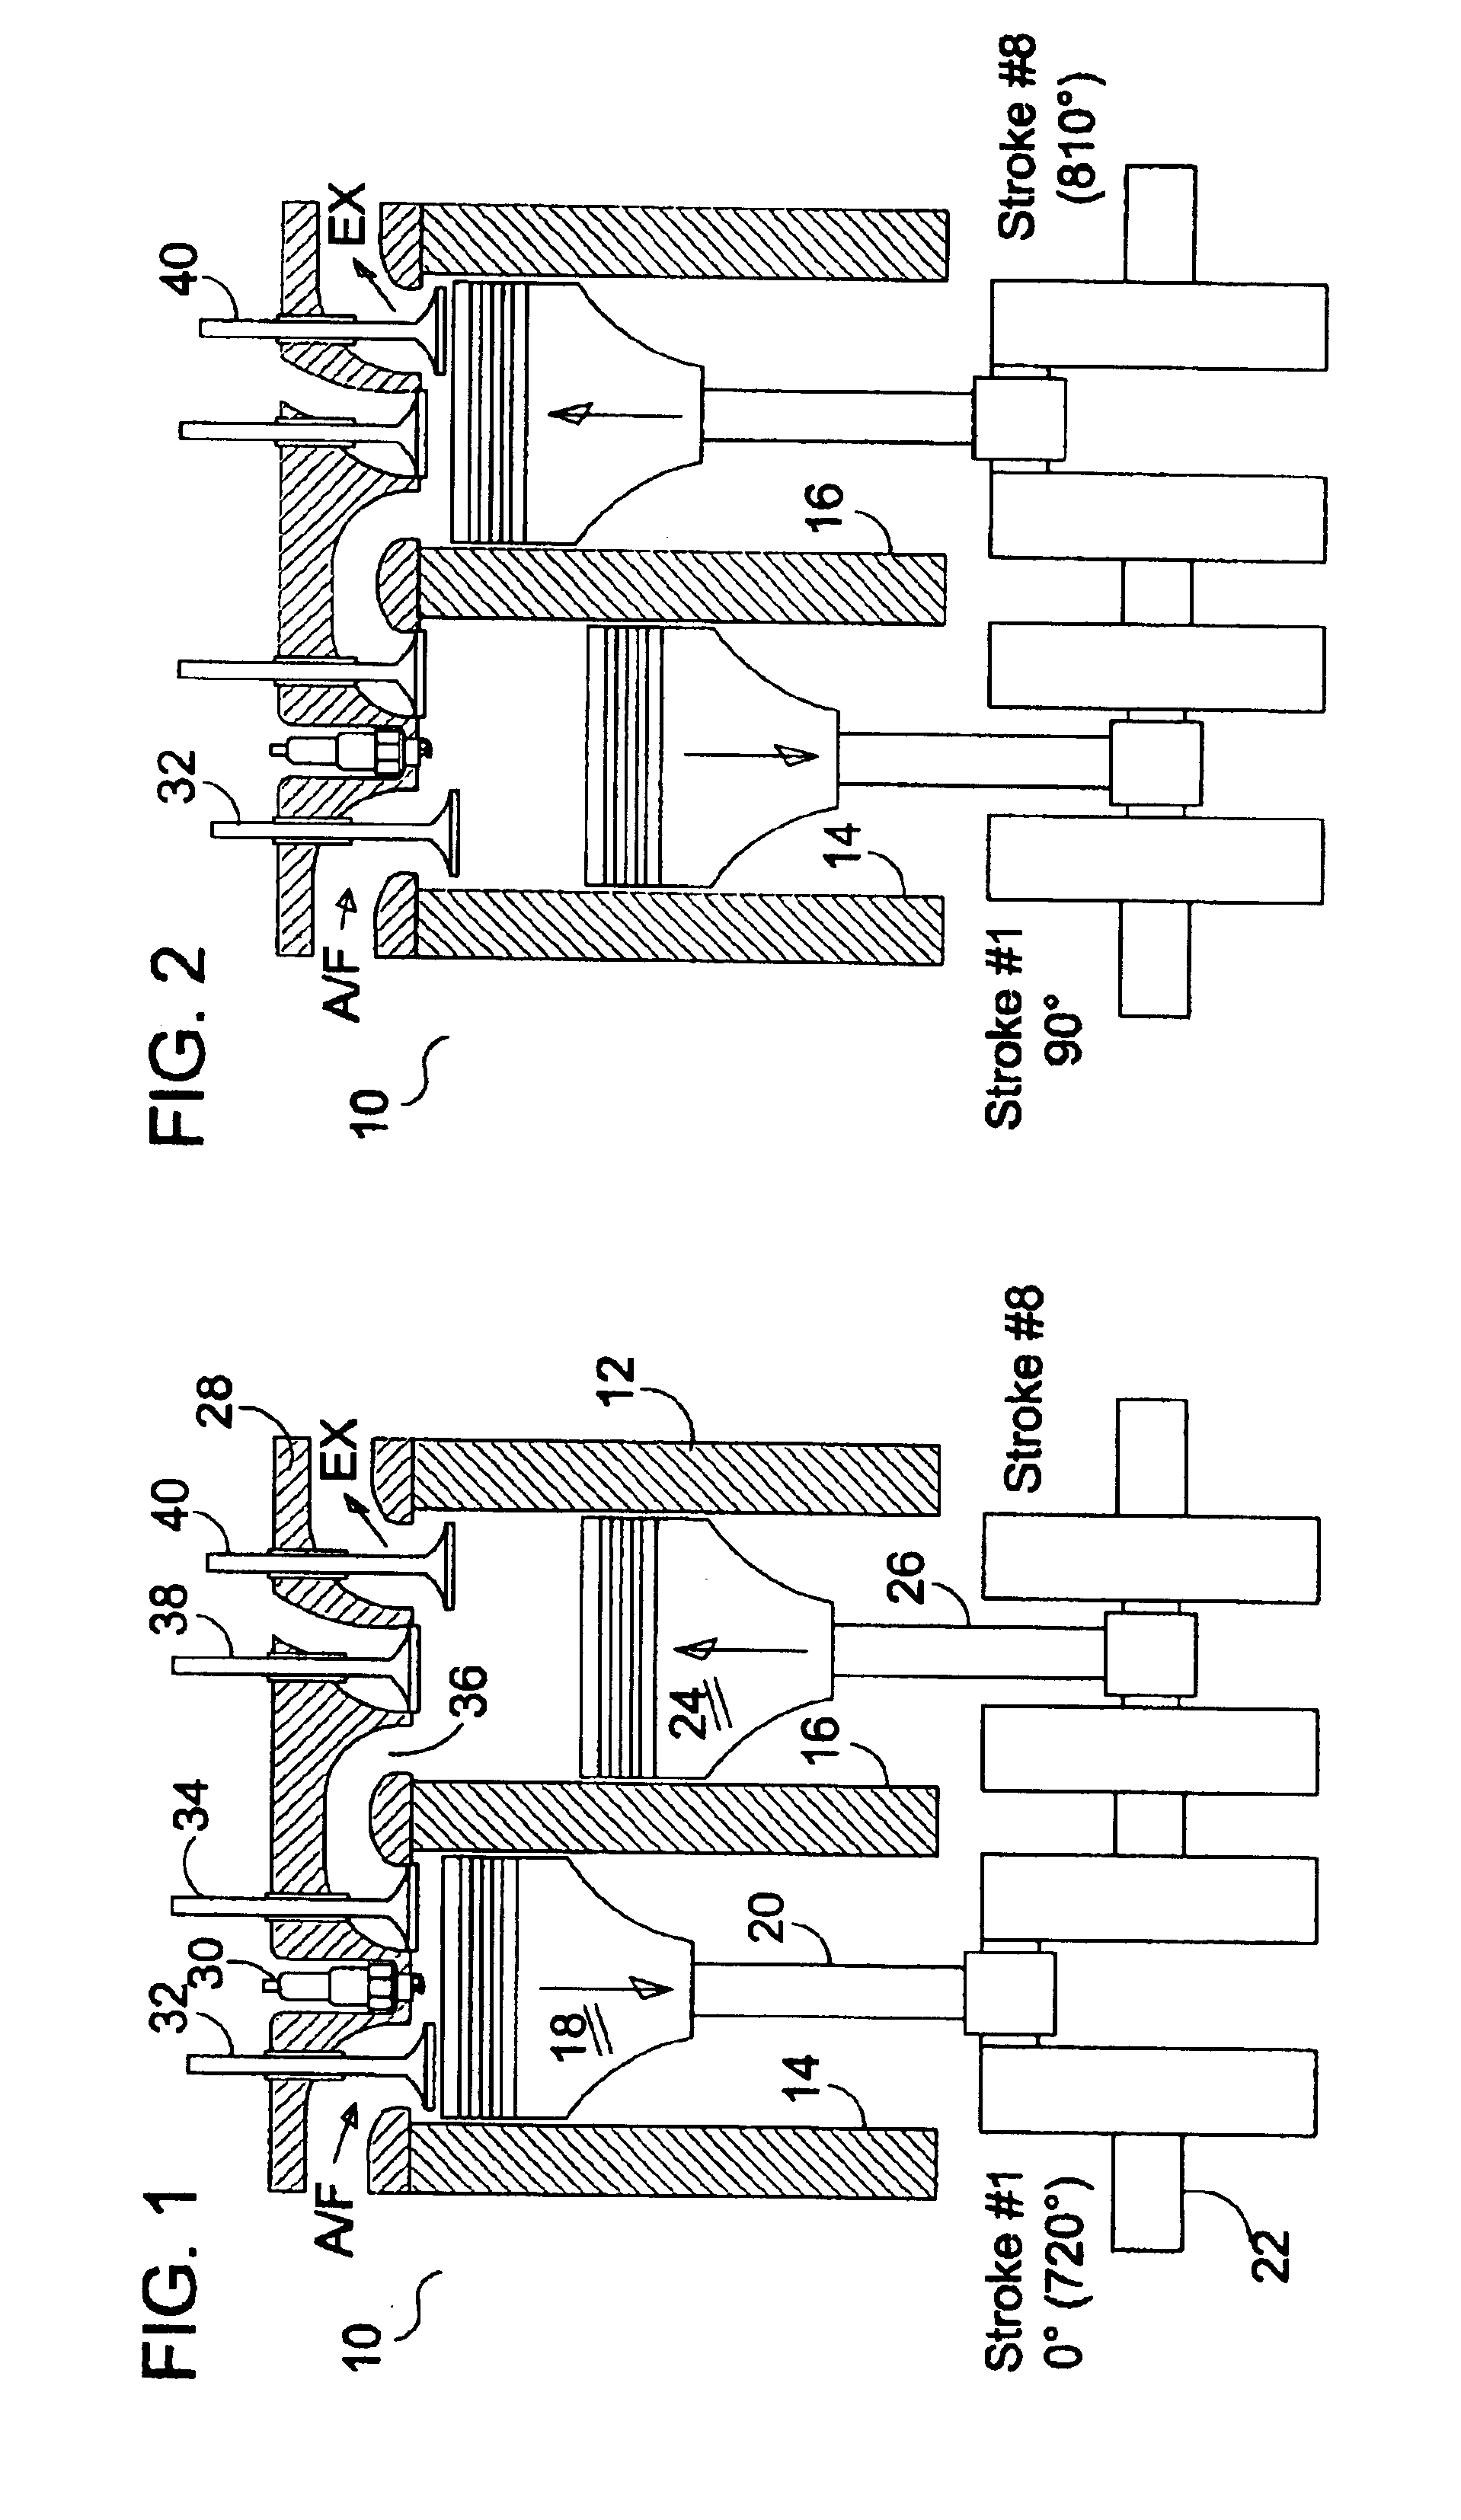 Eight-stroke internal combustion engine utilizing a slave cylinder